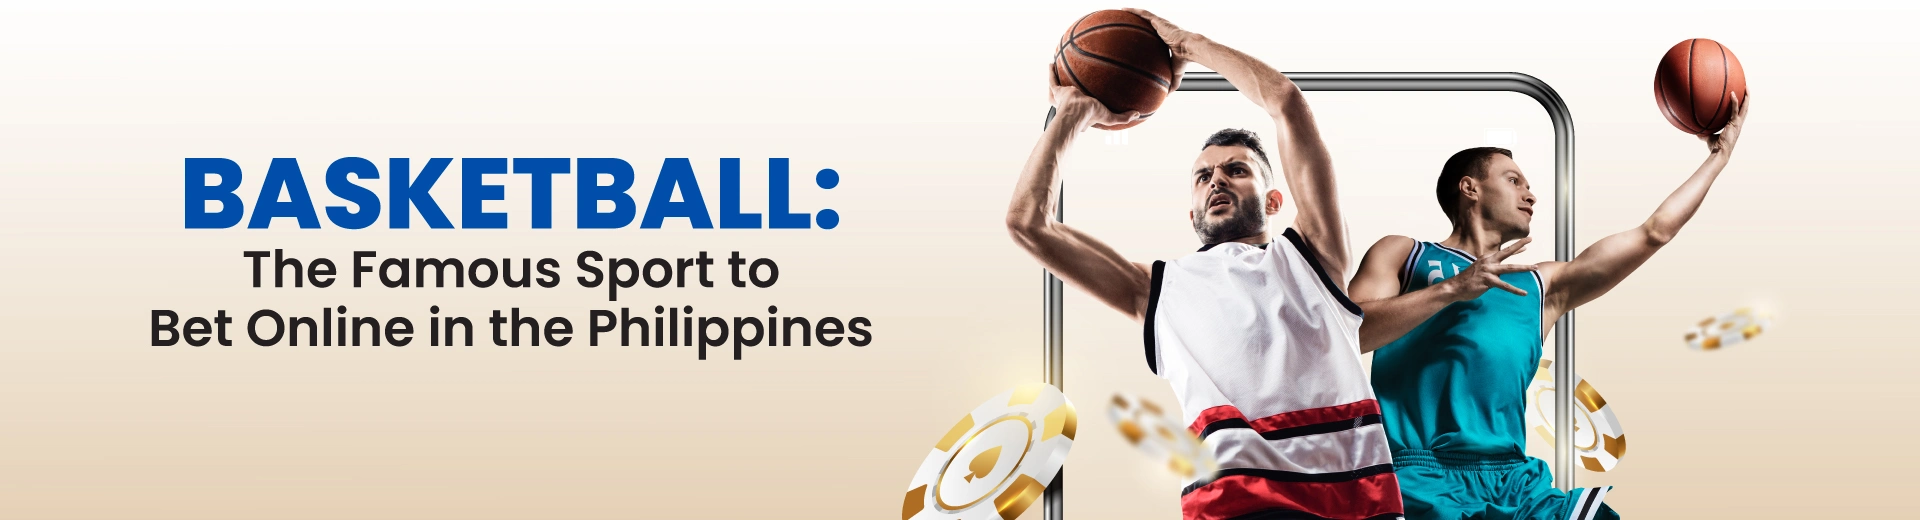 OKBet: The Best Online Basketball Betting Market in the Philippines